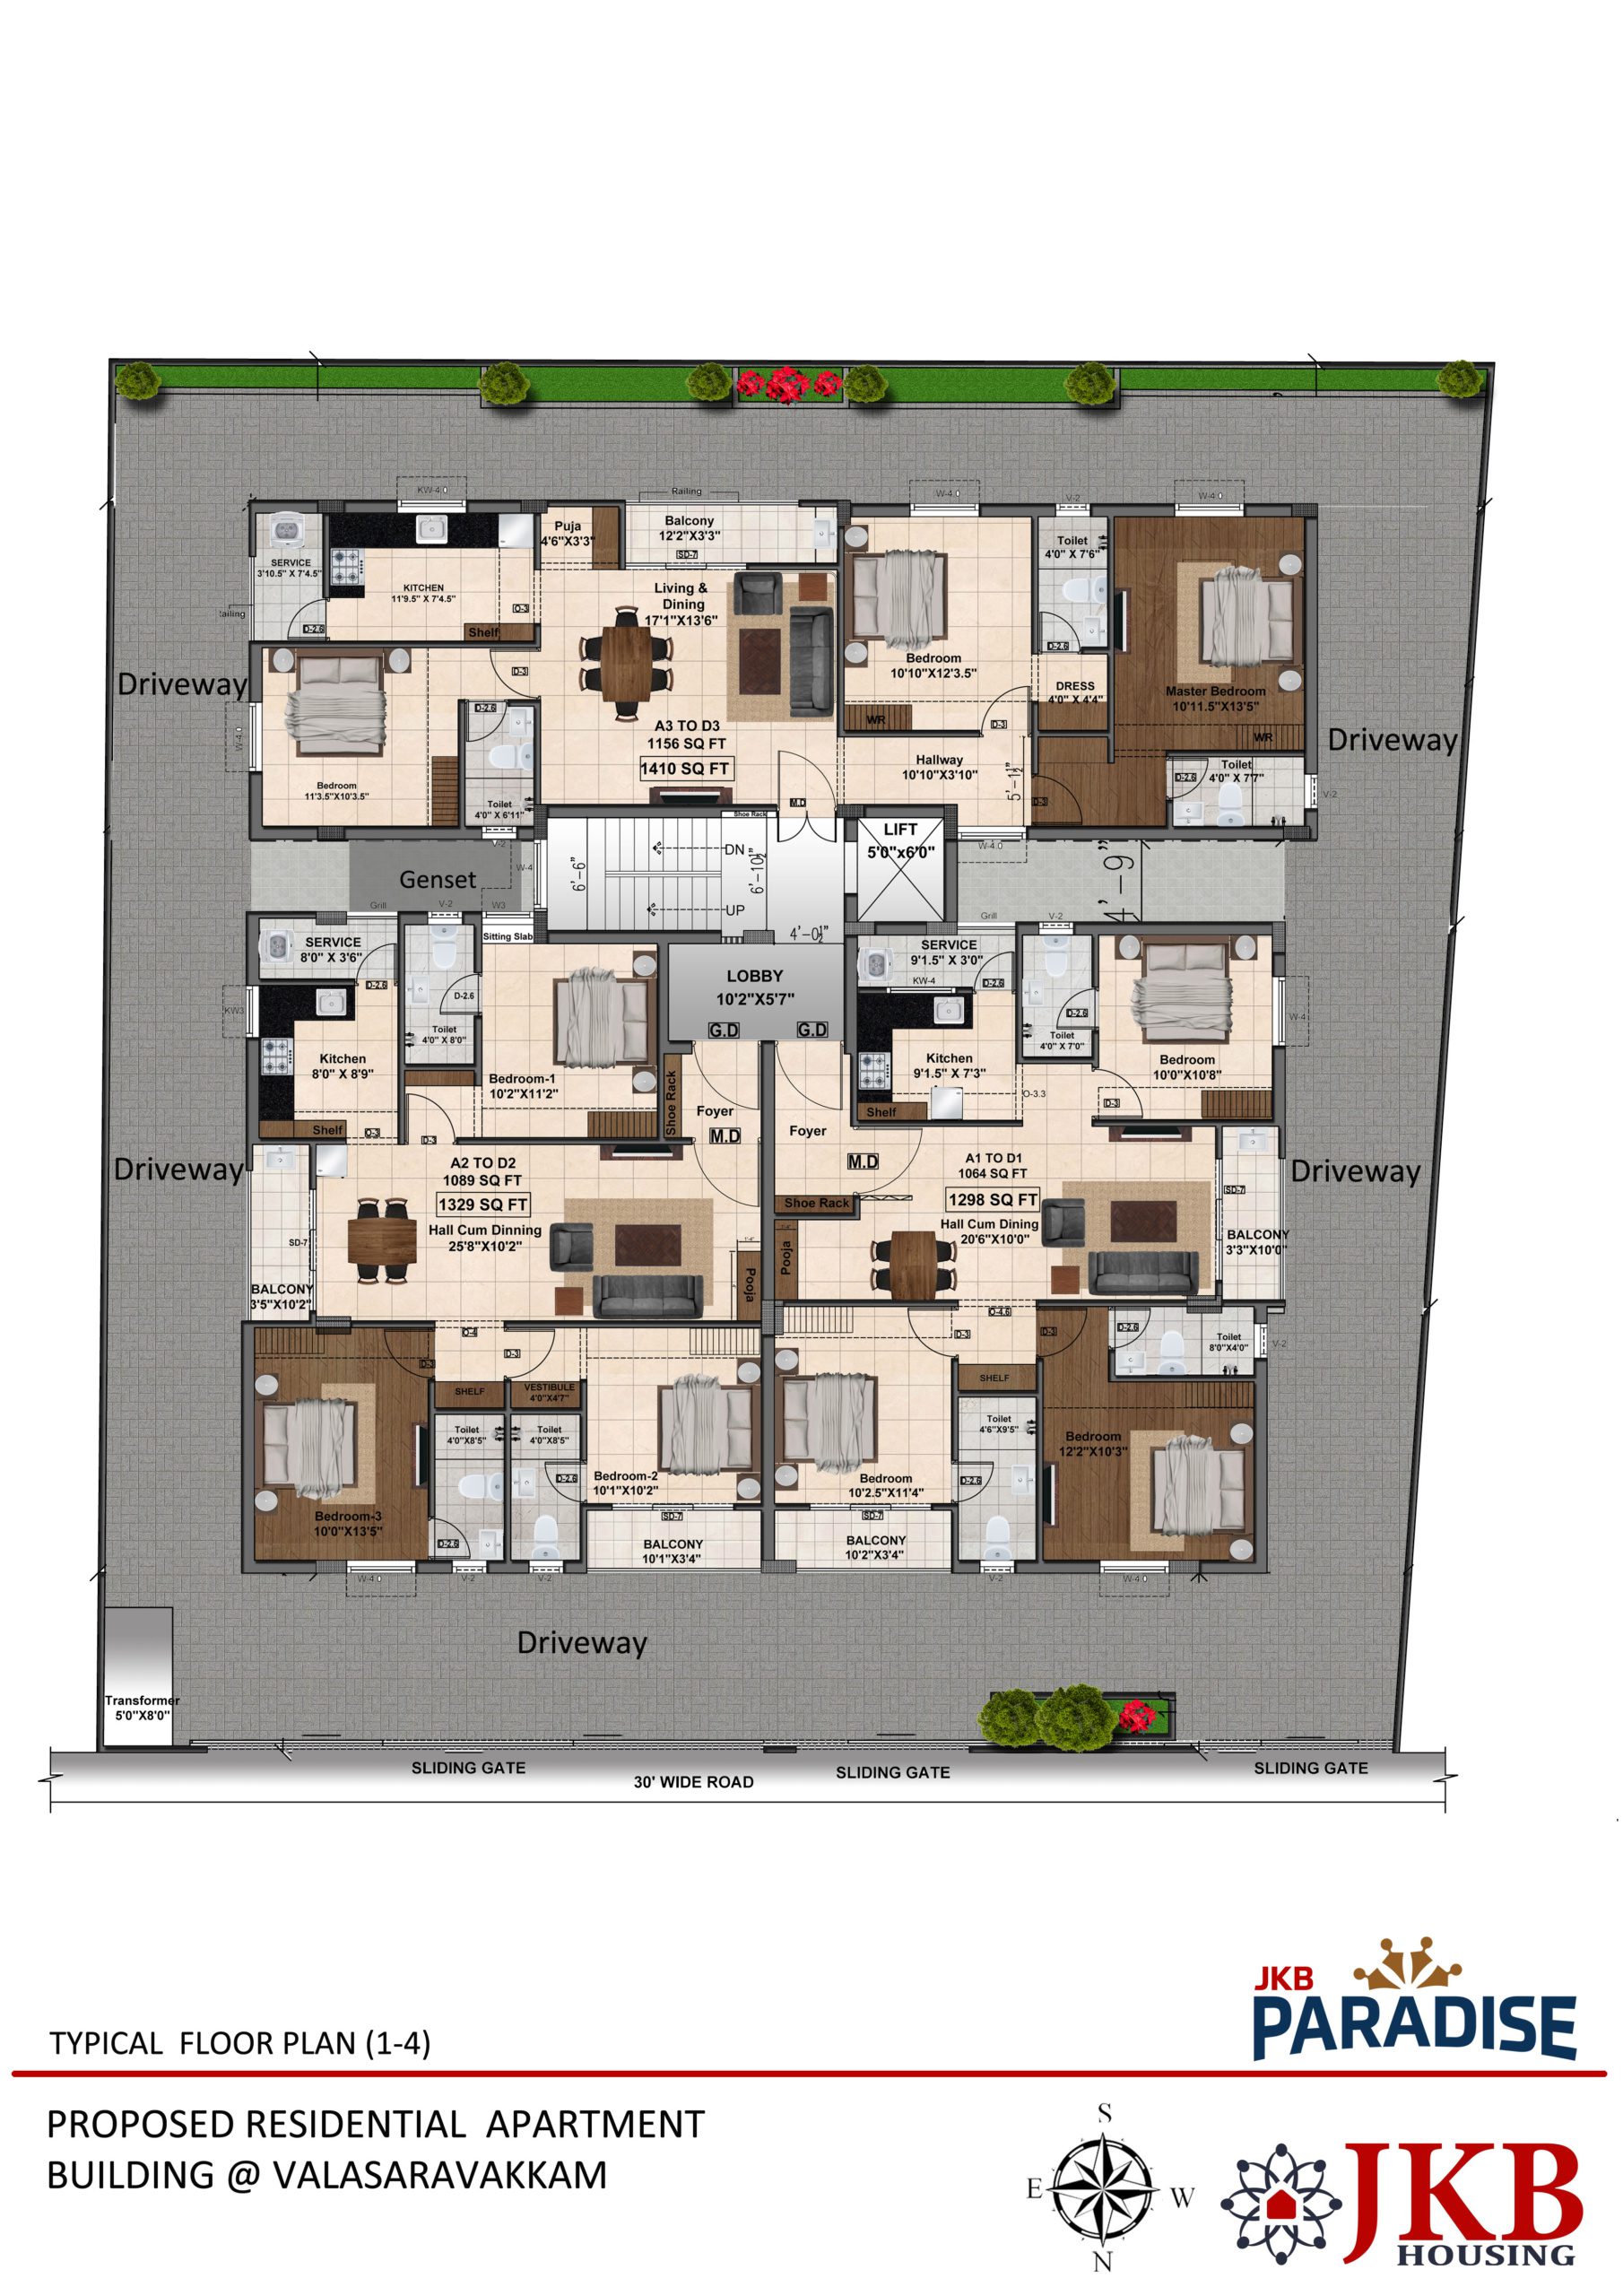 JKB Paradise Typical-Floor-Plan